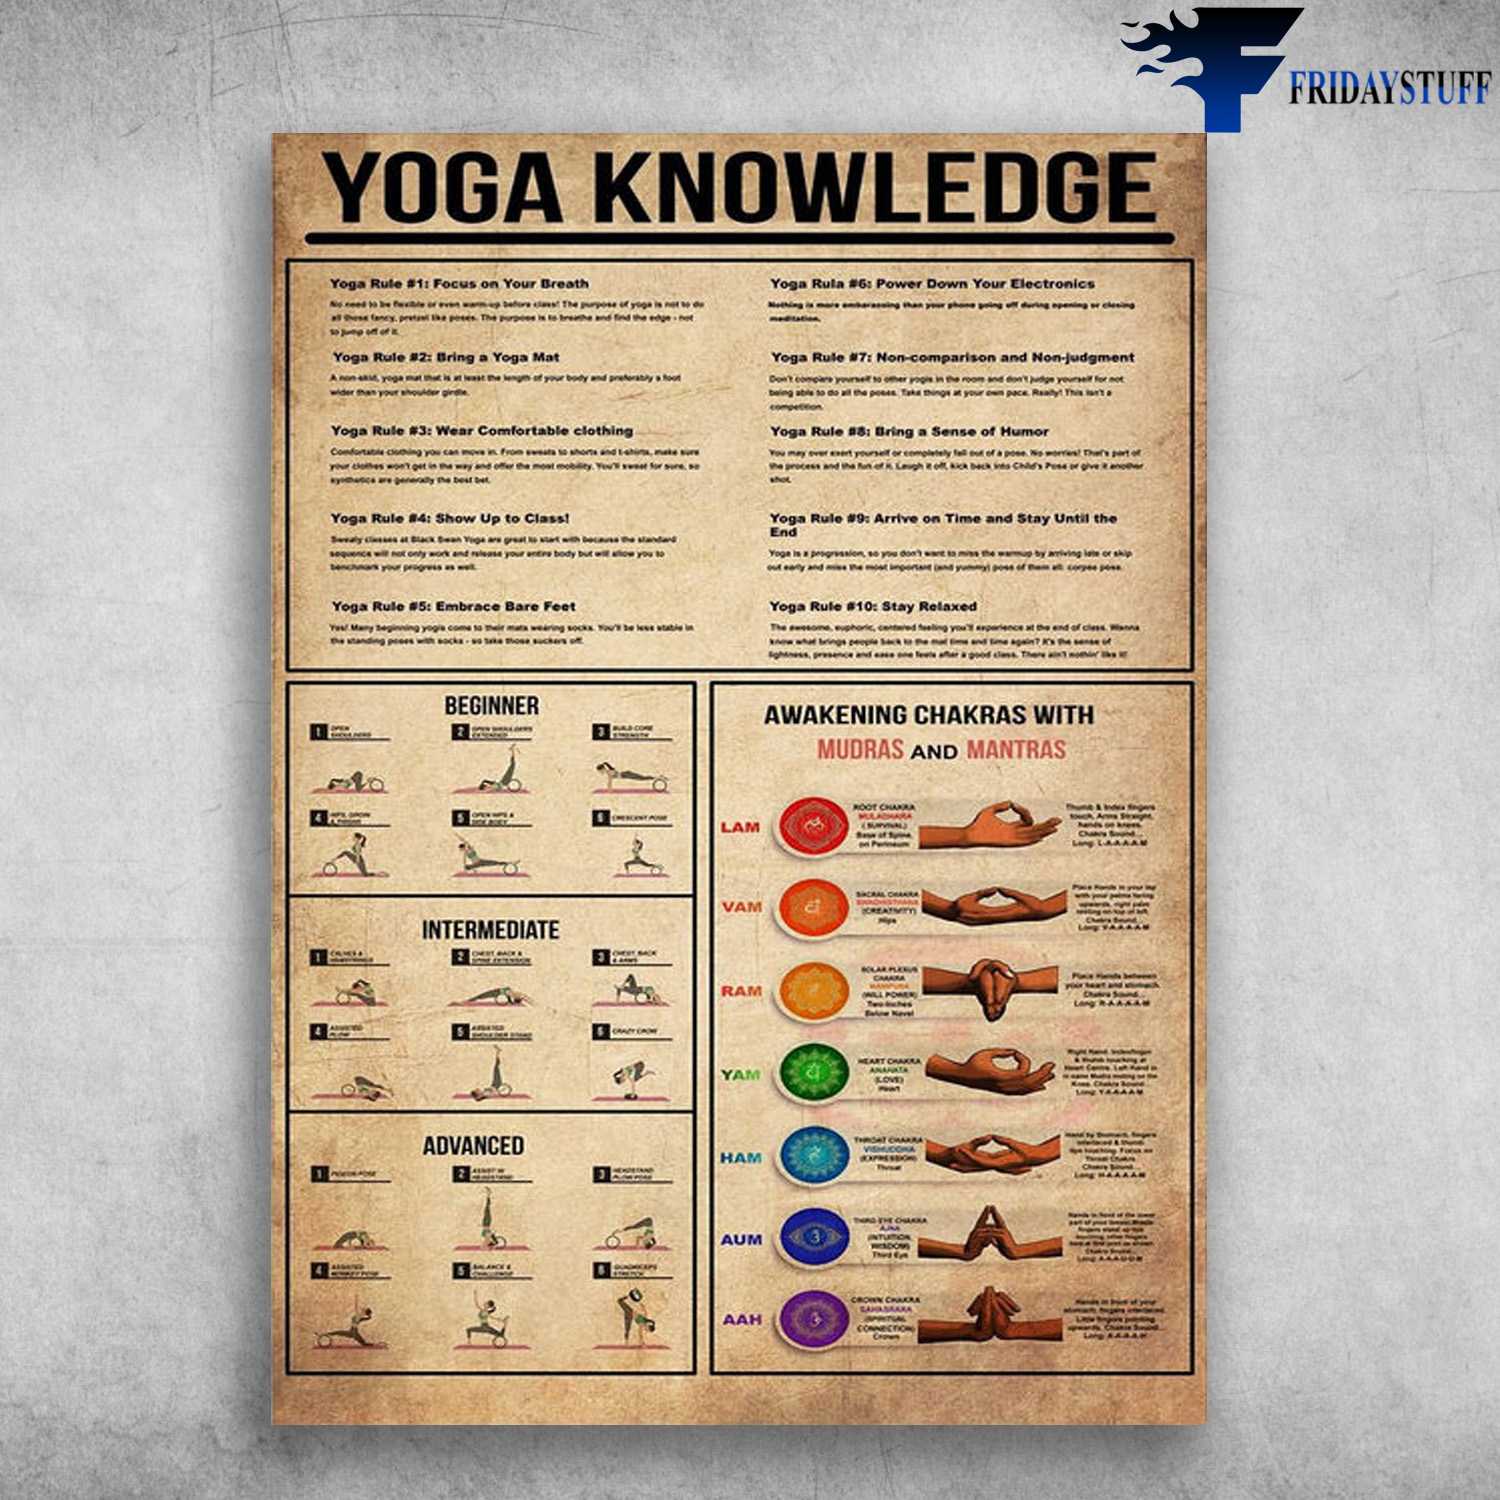 Yoga Knowledge - Beginner, Intermediate, Advance, Awakening Chakras With Mudras And Mantras, Yoga Lover